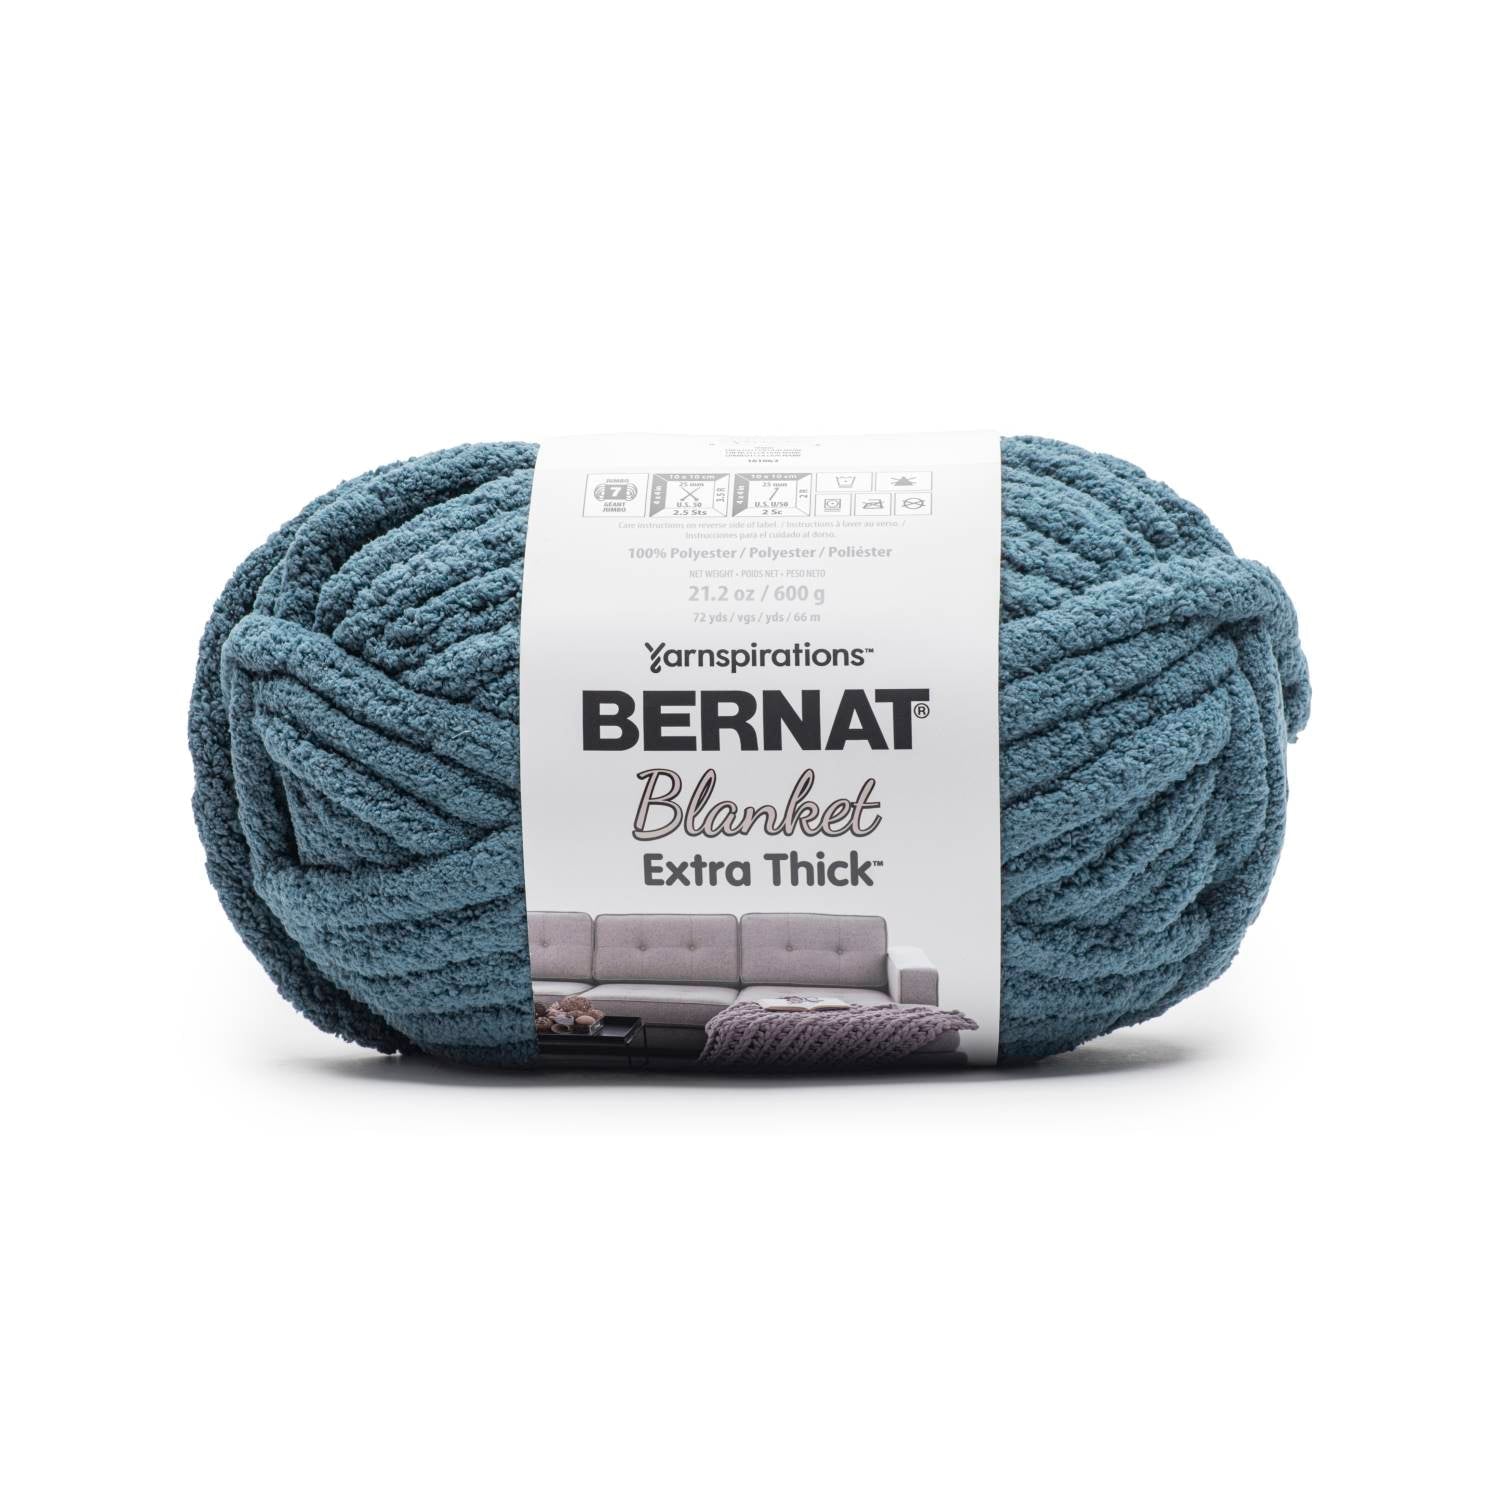 Bernat Blanket Extra Thick Yarn (600g/21.2oz) - Discontinued Shades Blue Spruce